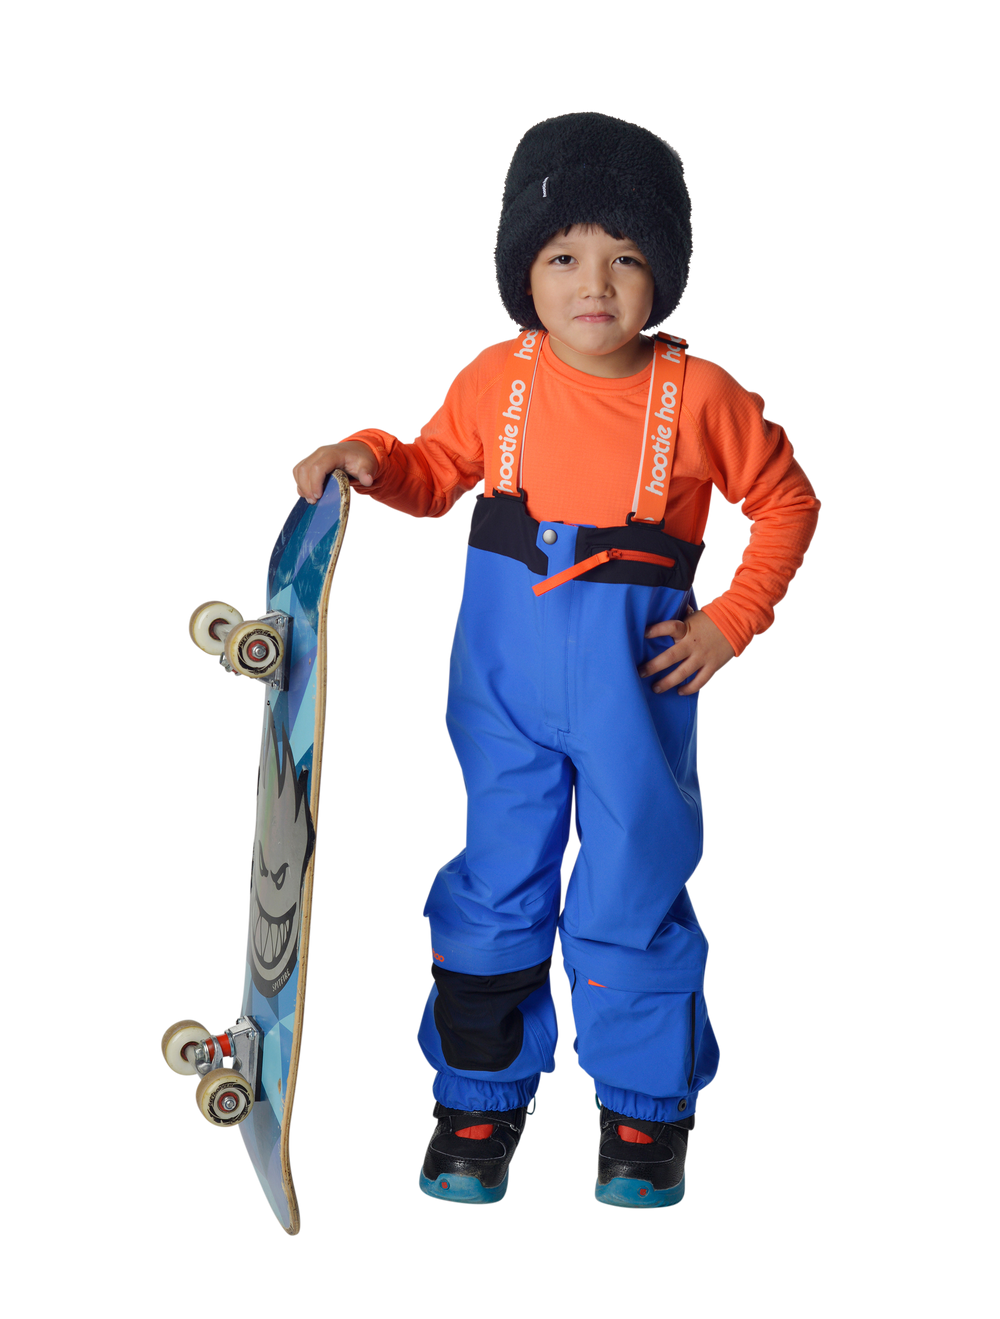 Tiptop Kids Shell Bib Pants for Skiing & Snowboarding